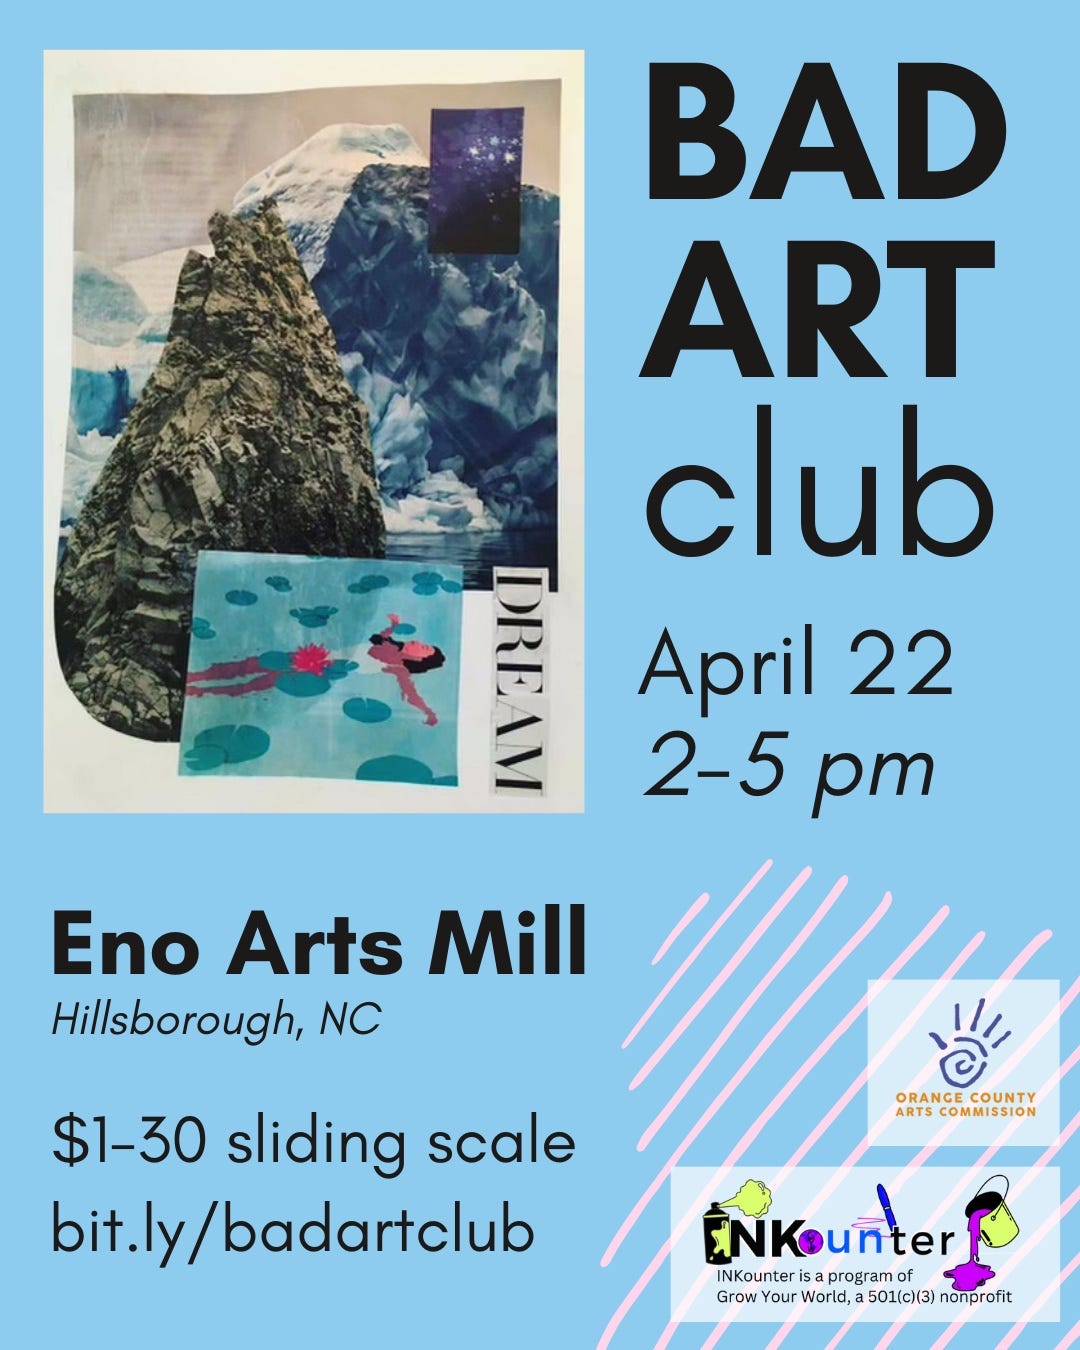 Bad Art Club promo poster for April